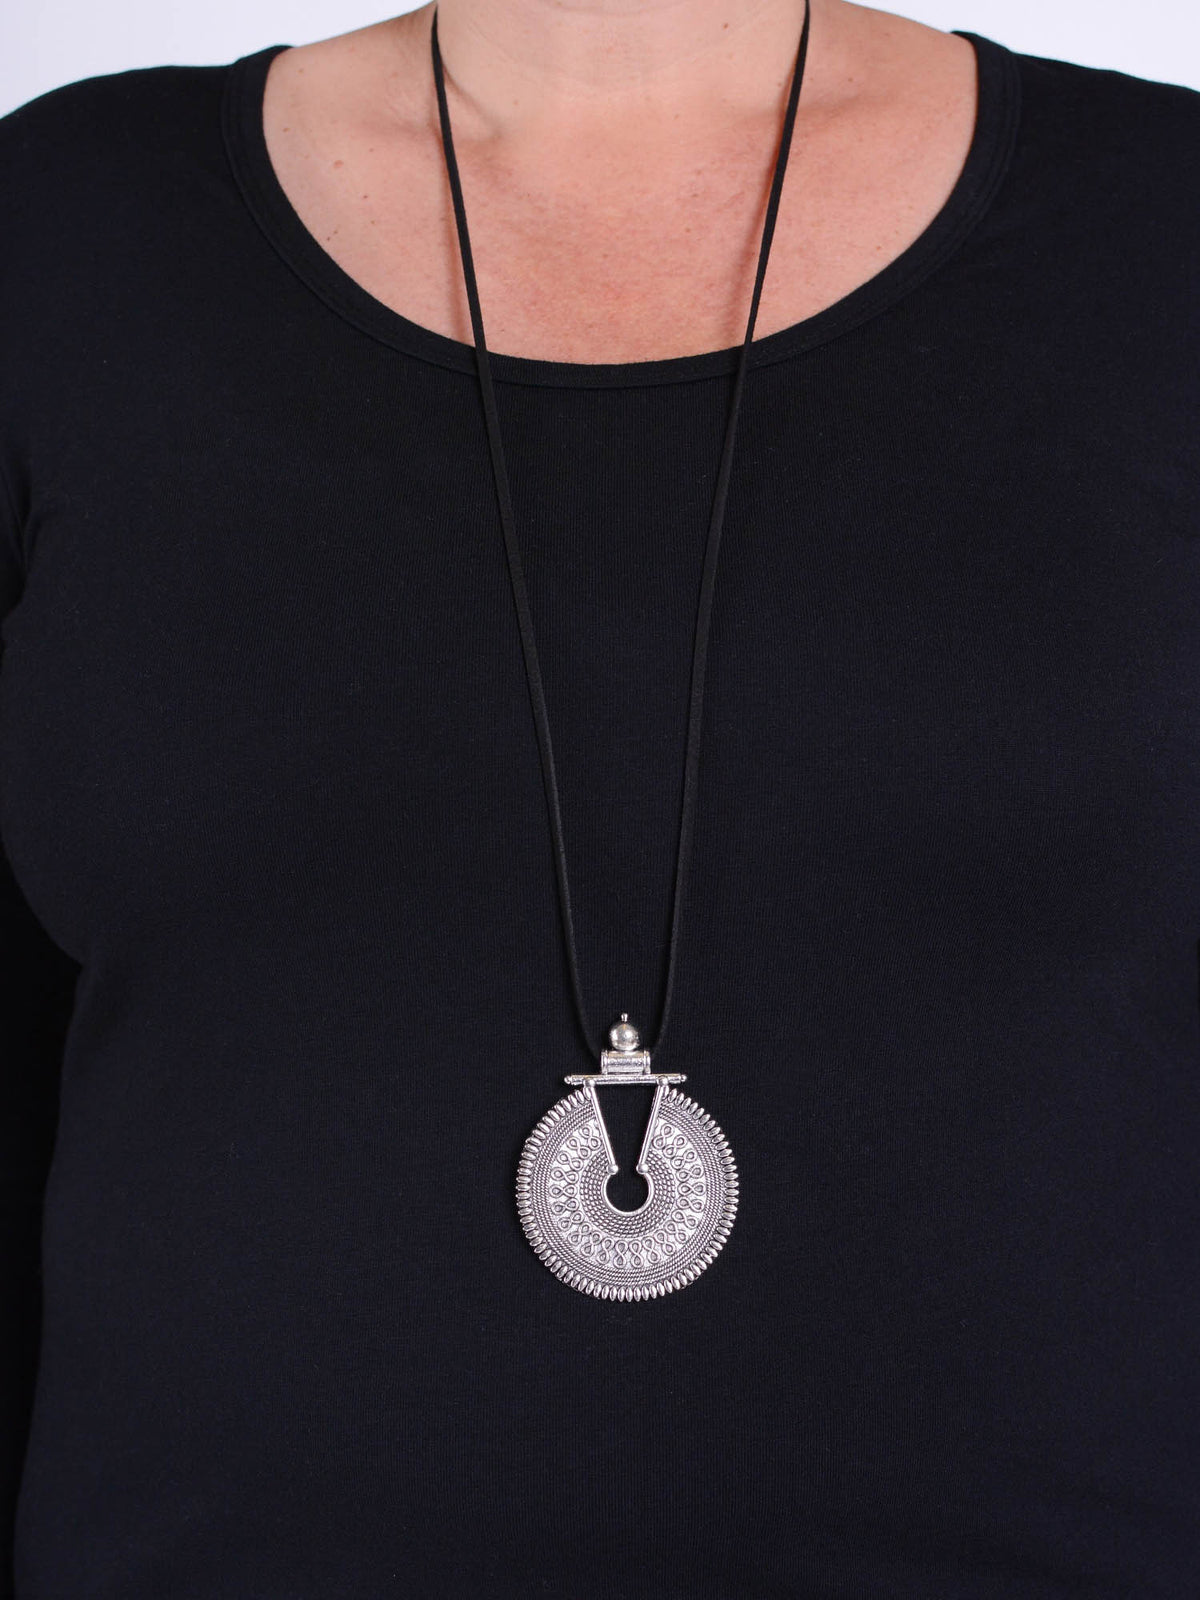 Necklace  - Black Suede Necklace with Disc Pendant - CAT2, Necklaces & Pendants, Pure Plus Clothing, Lagenlook Clothing, Plus Size Fashion, Over 50 Fashion